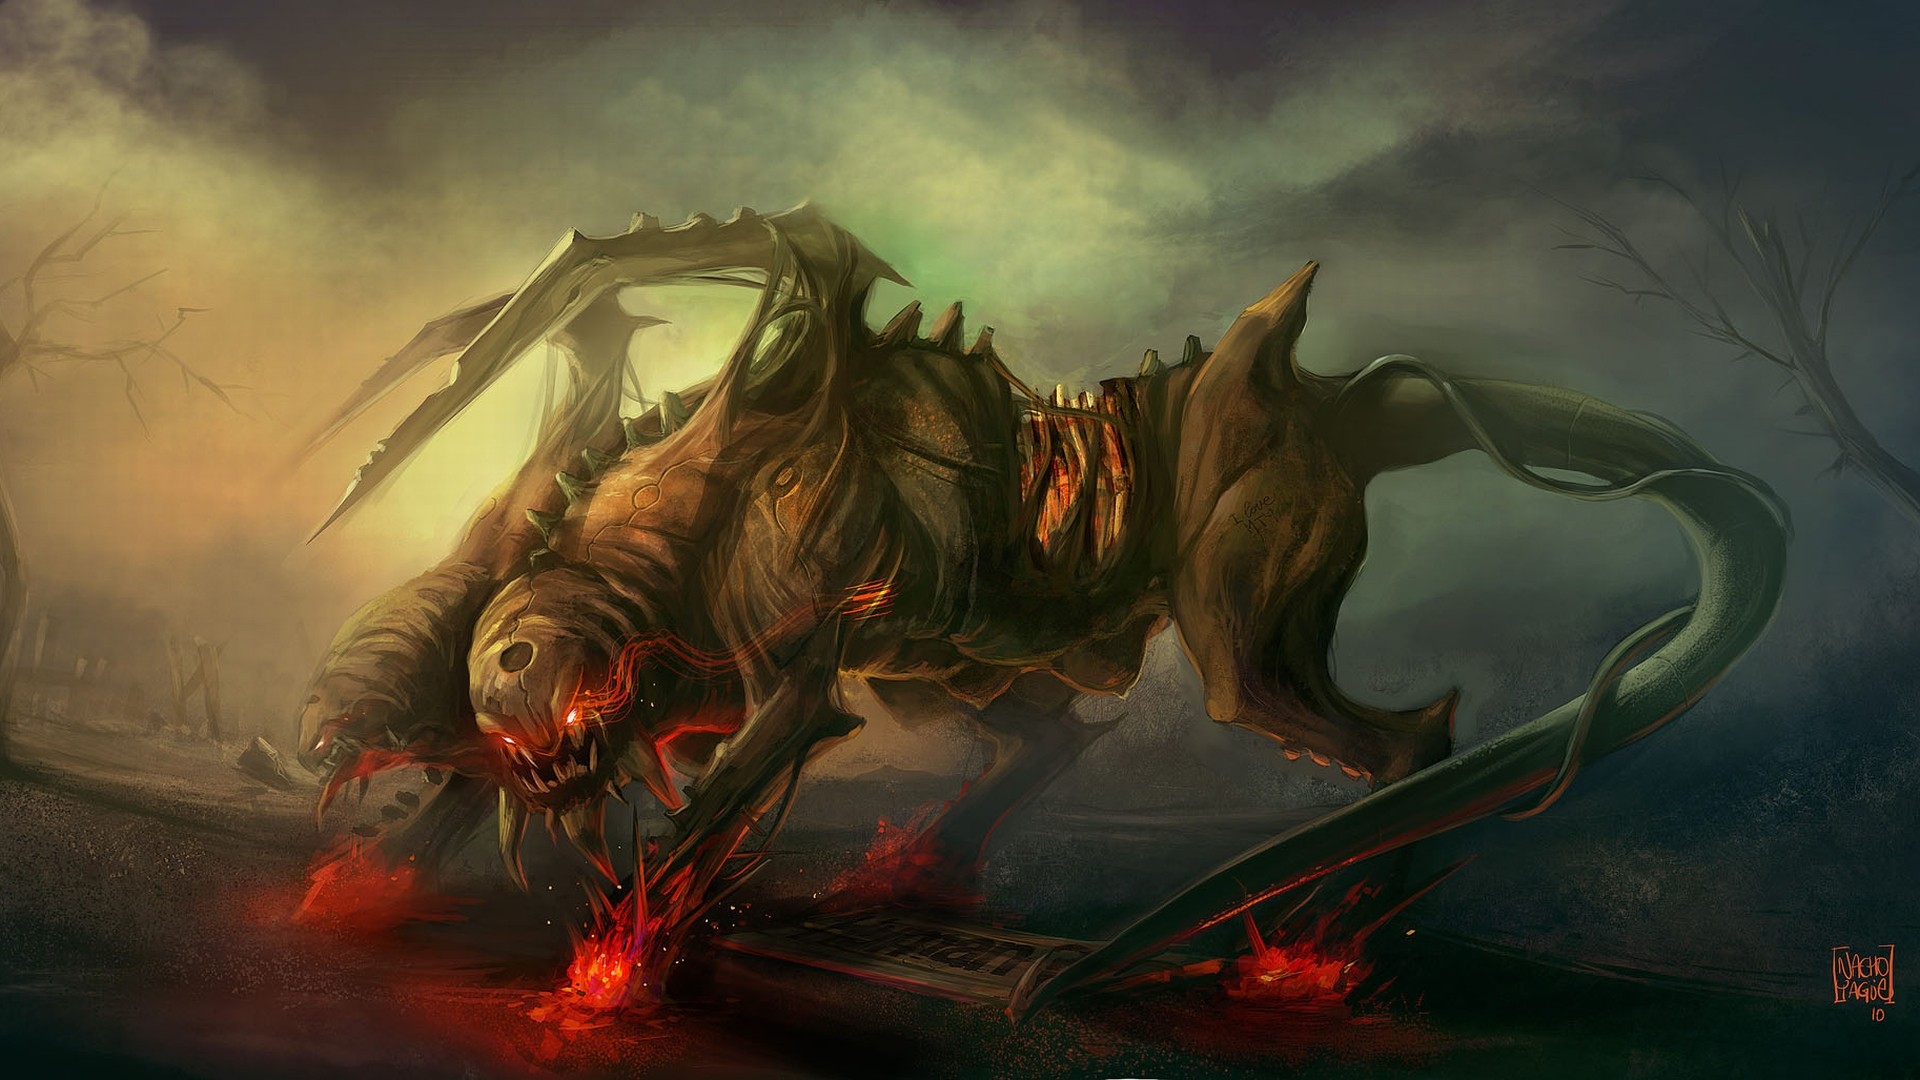 horror, fantasy art, creatures - desktop wallpaper